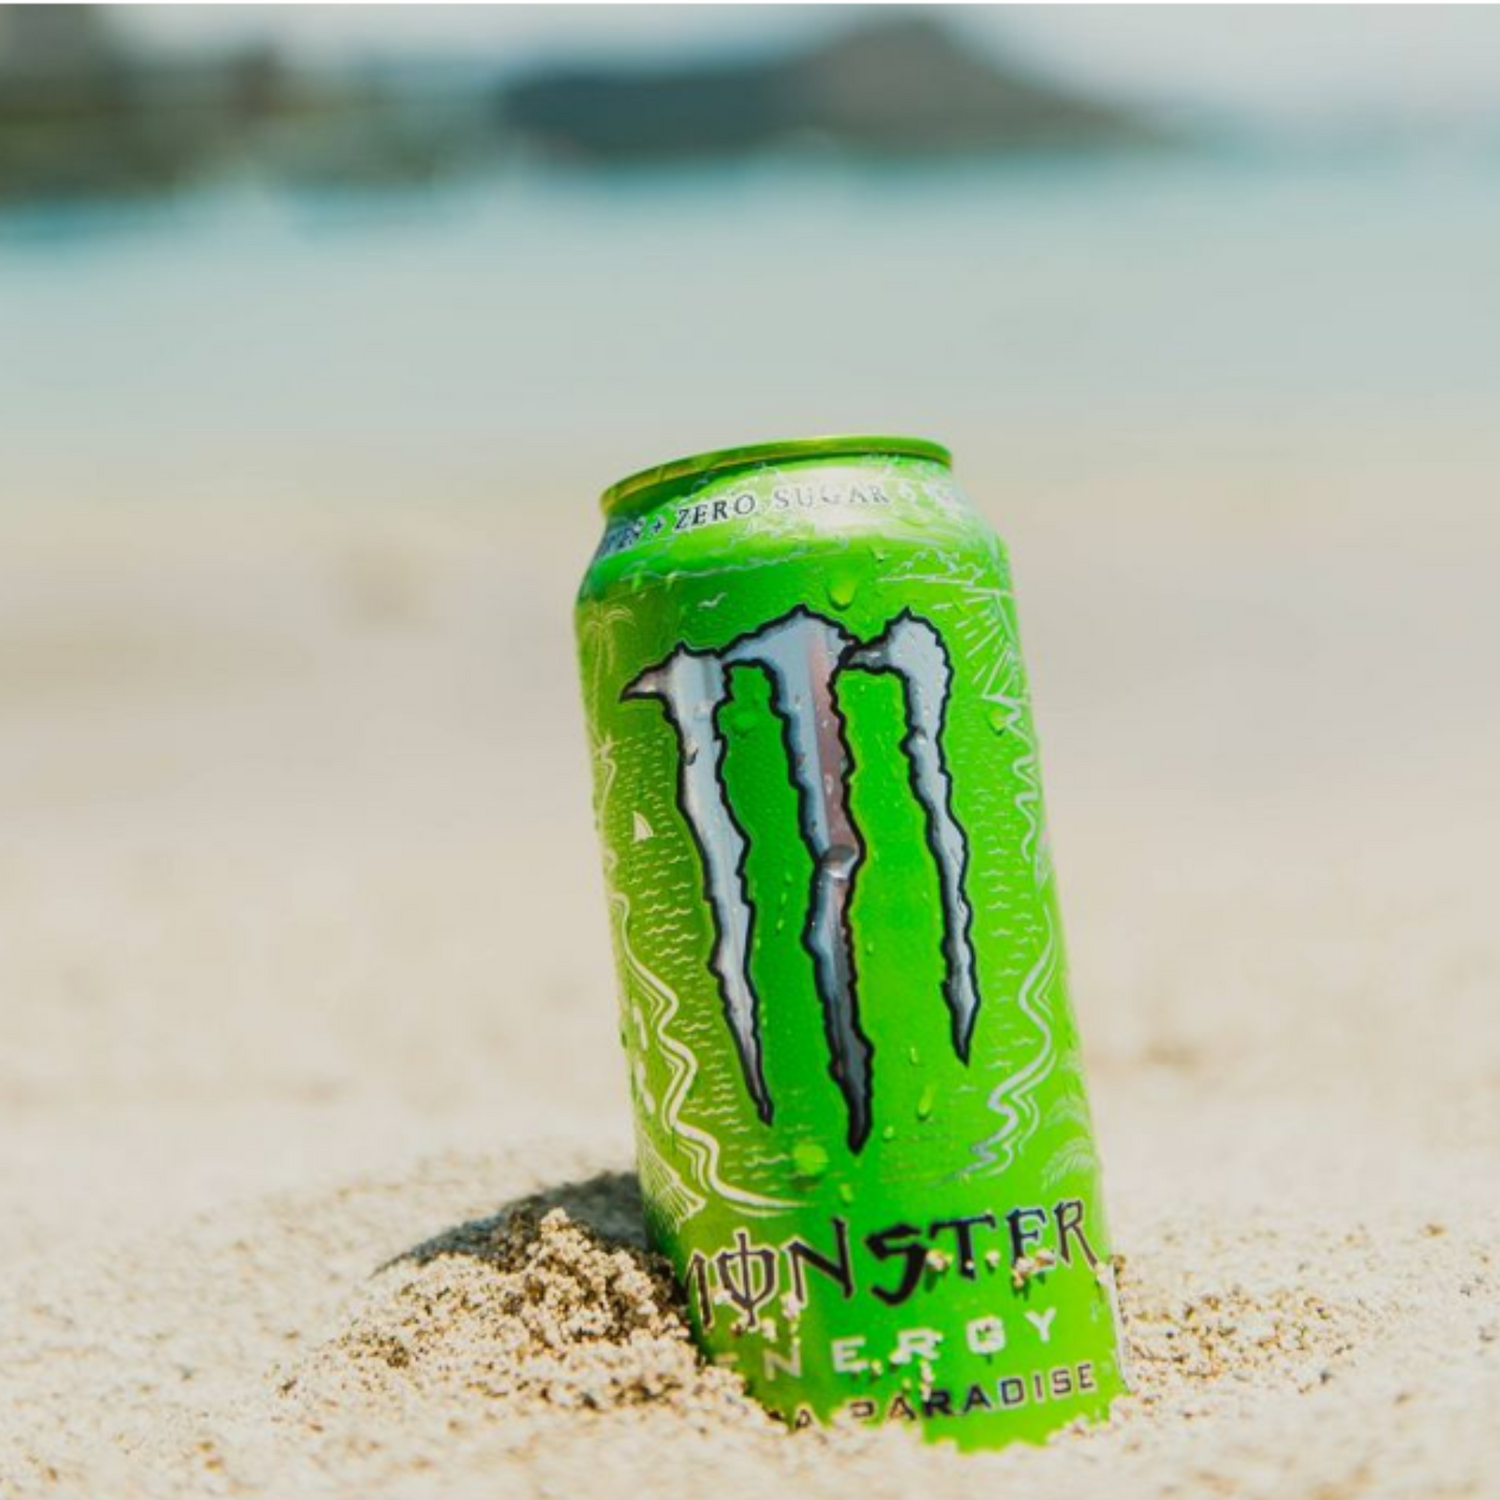 Monster Ultra Paradise, Sugar Free Energy Drink, 16 fl oz